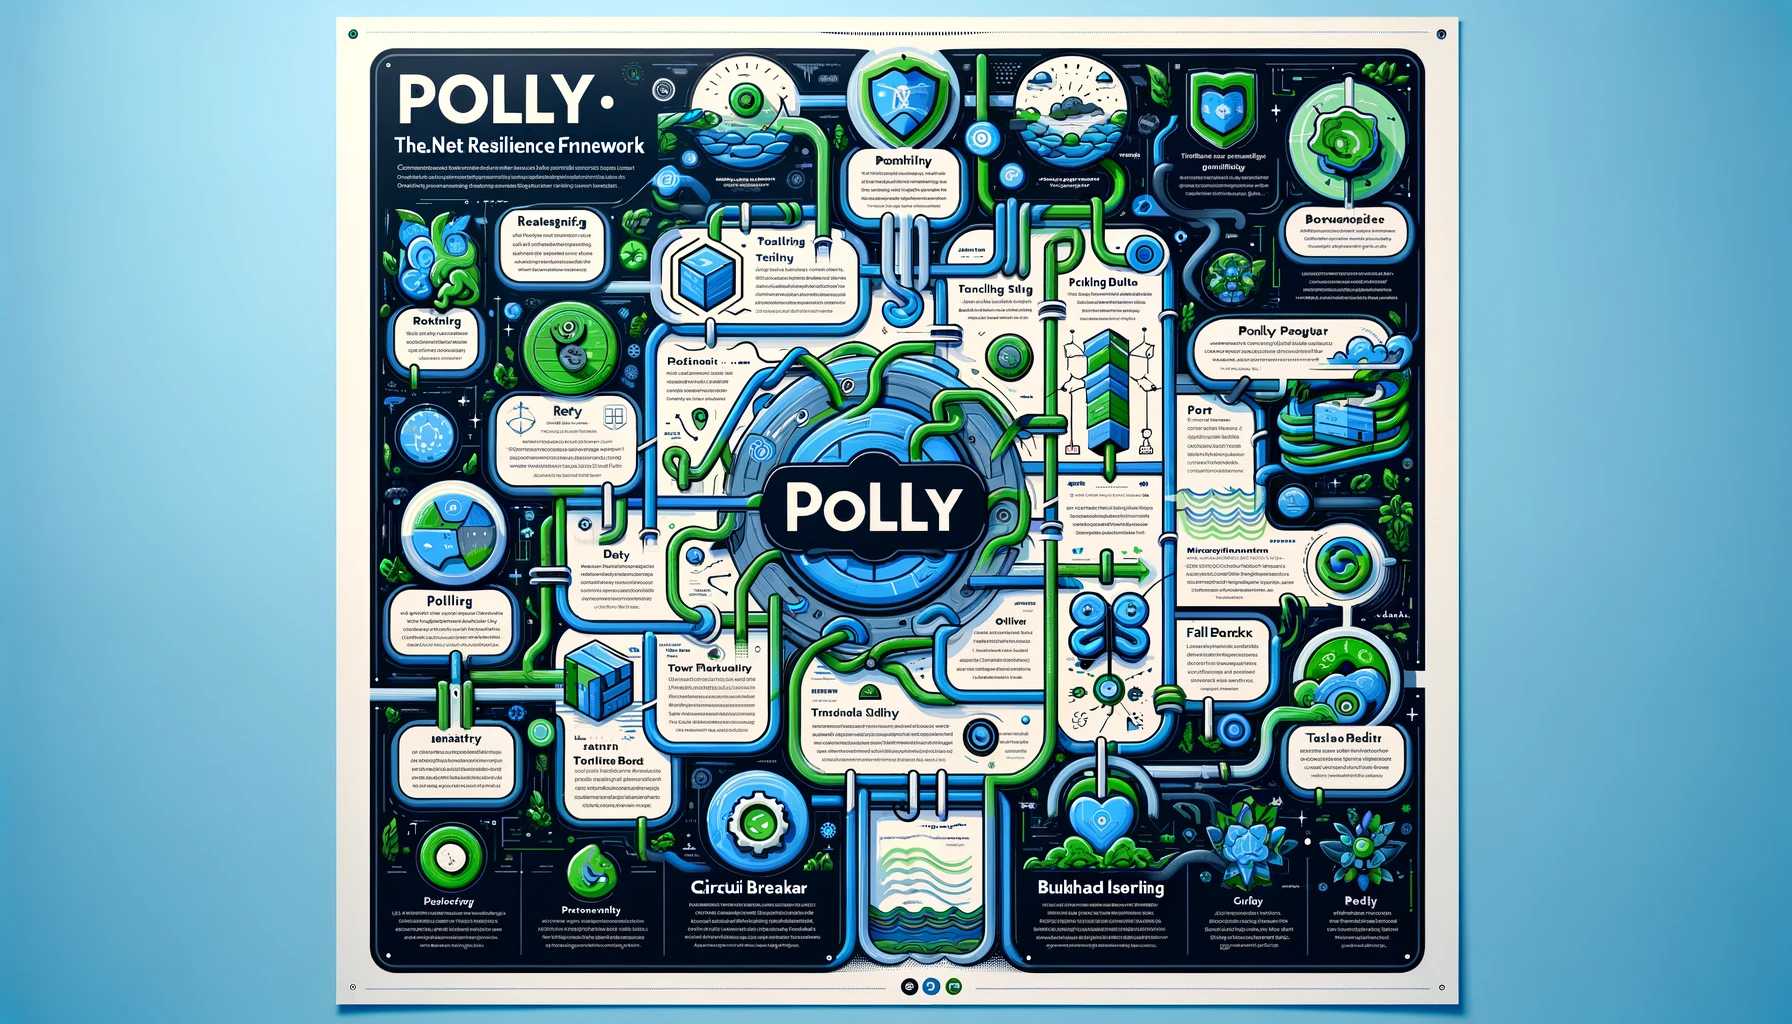 Polly. the .NET Resilience Framework